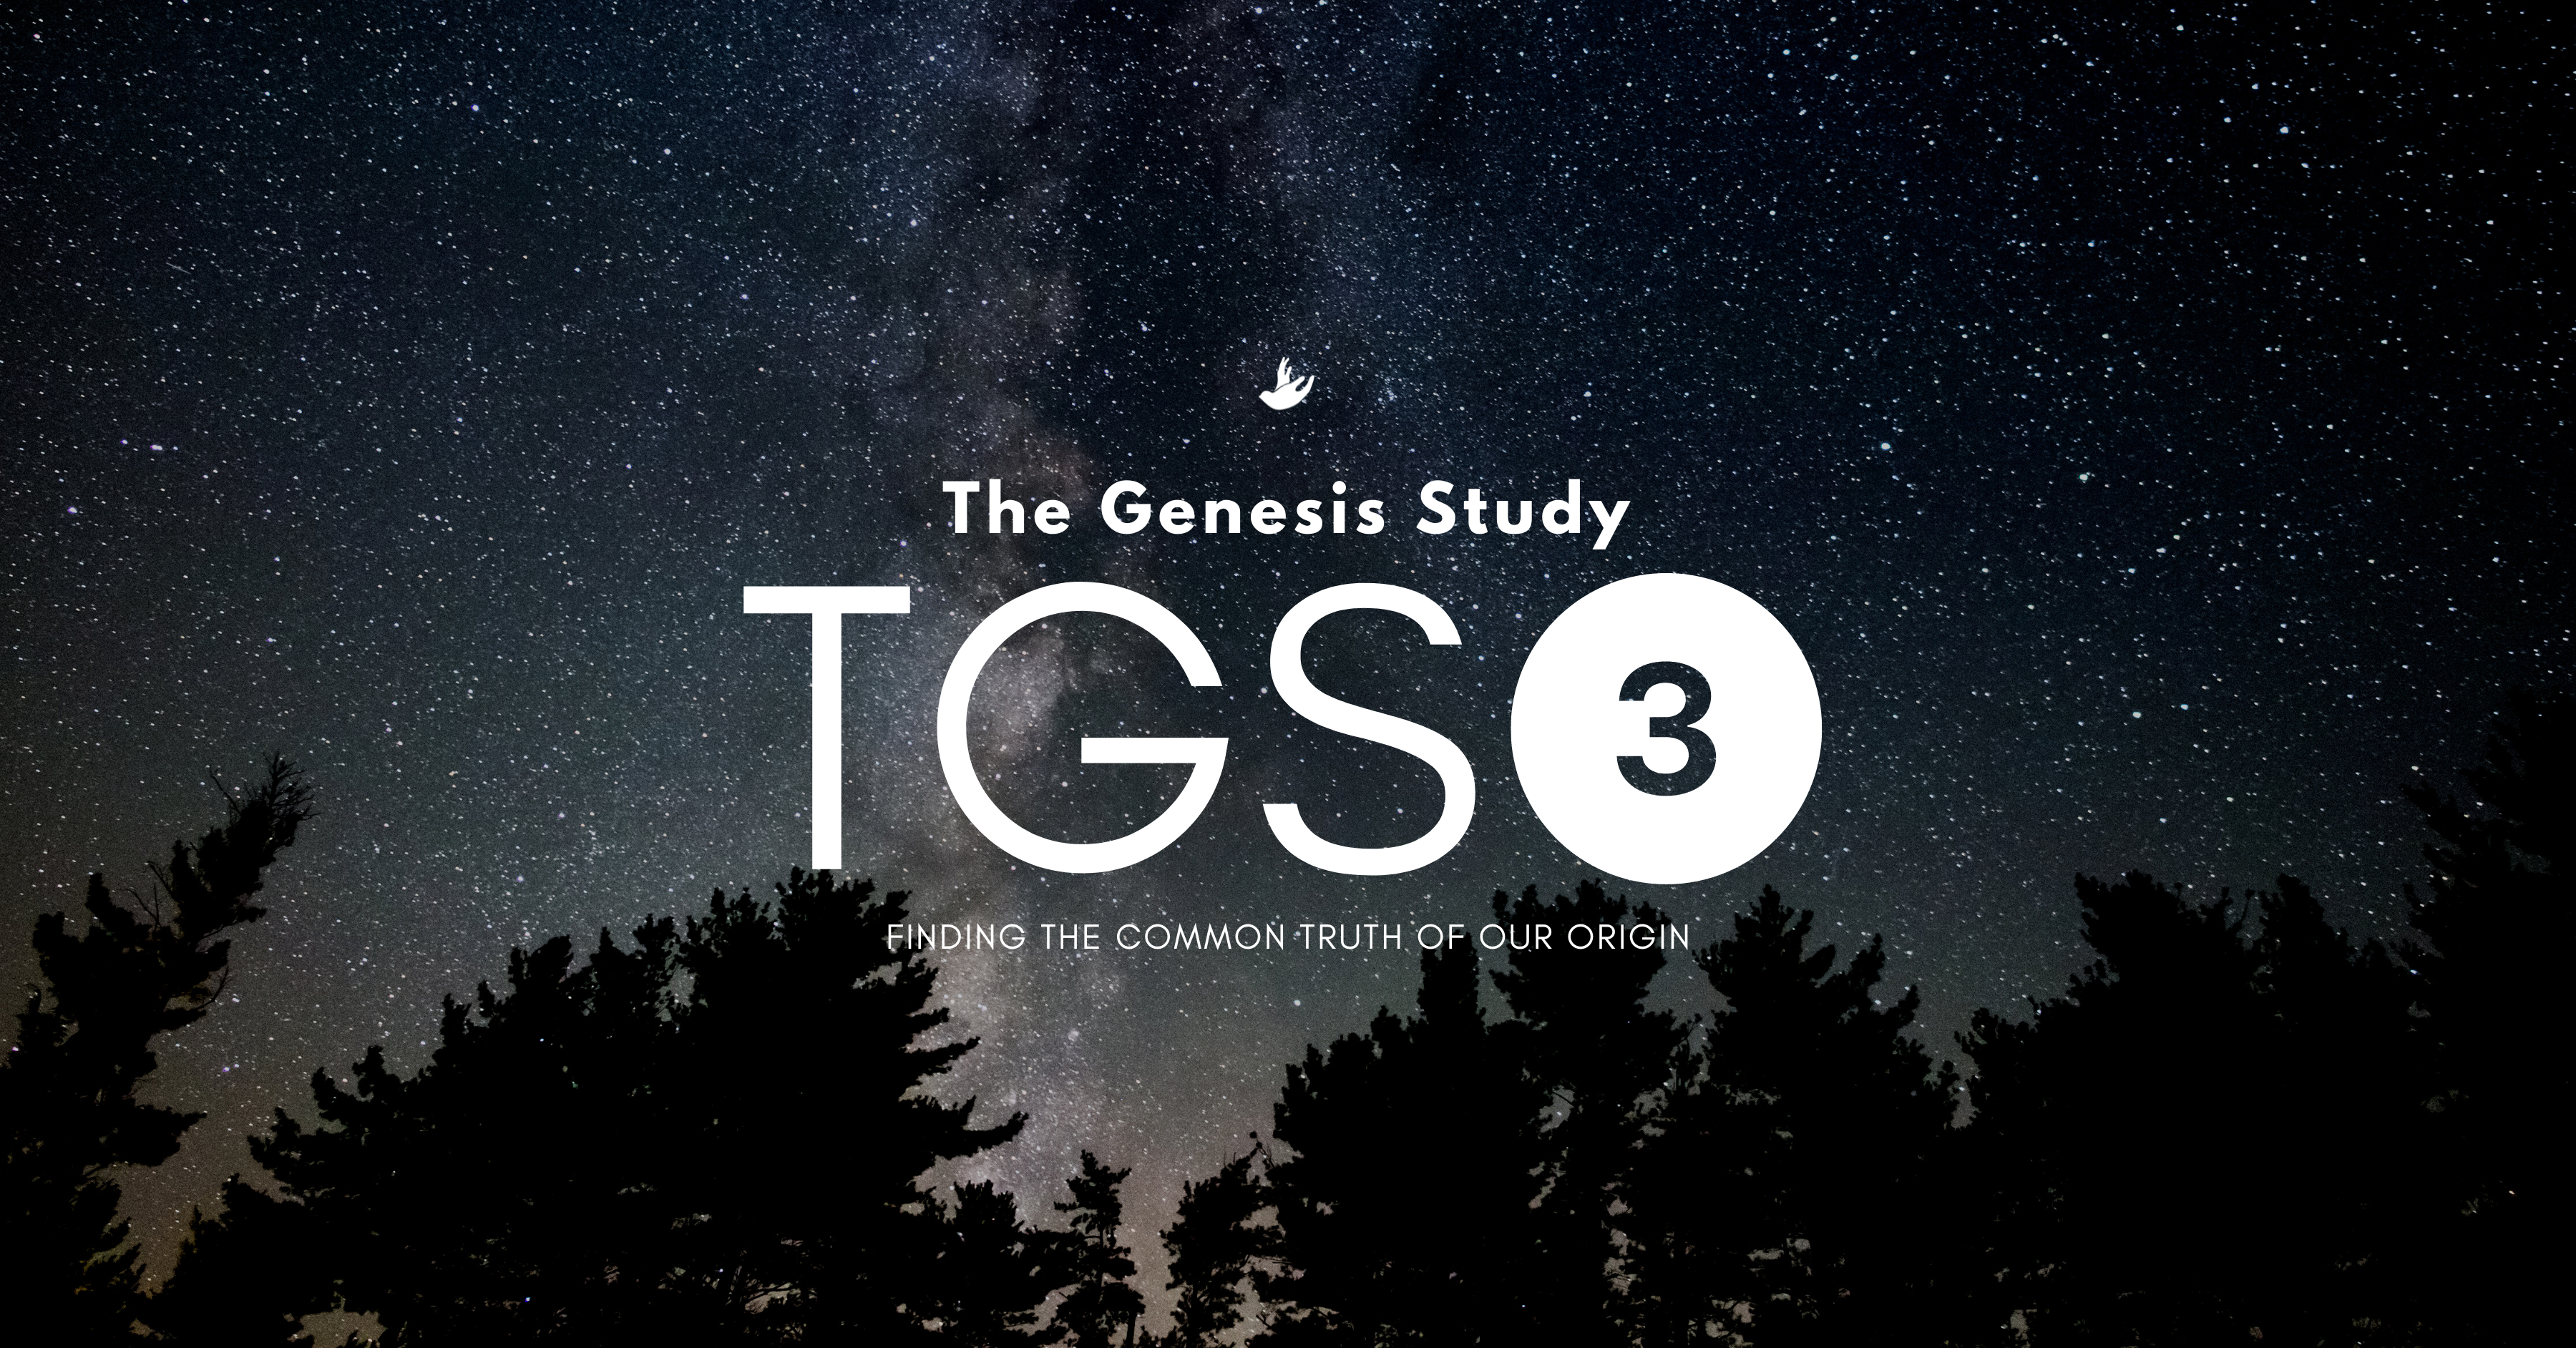 The Genesis Study